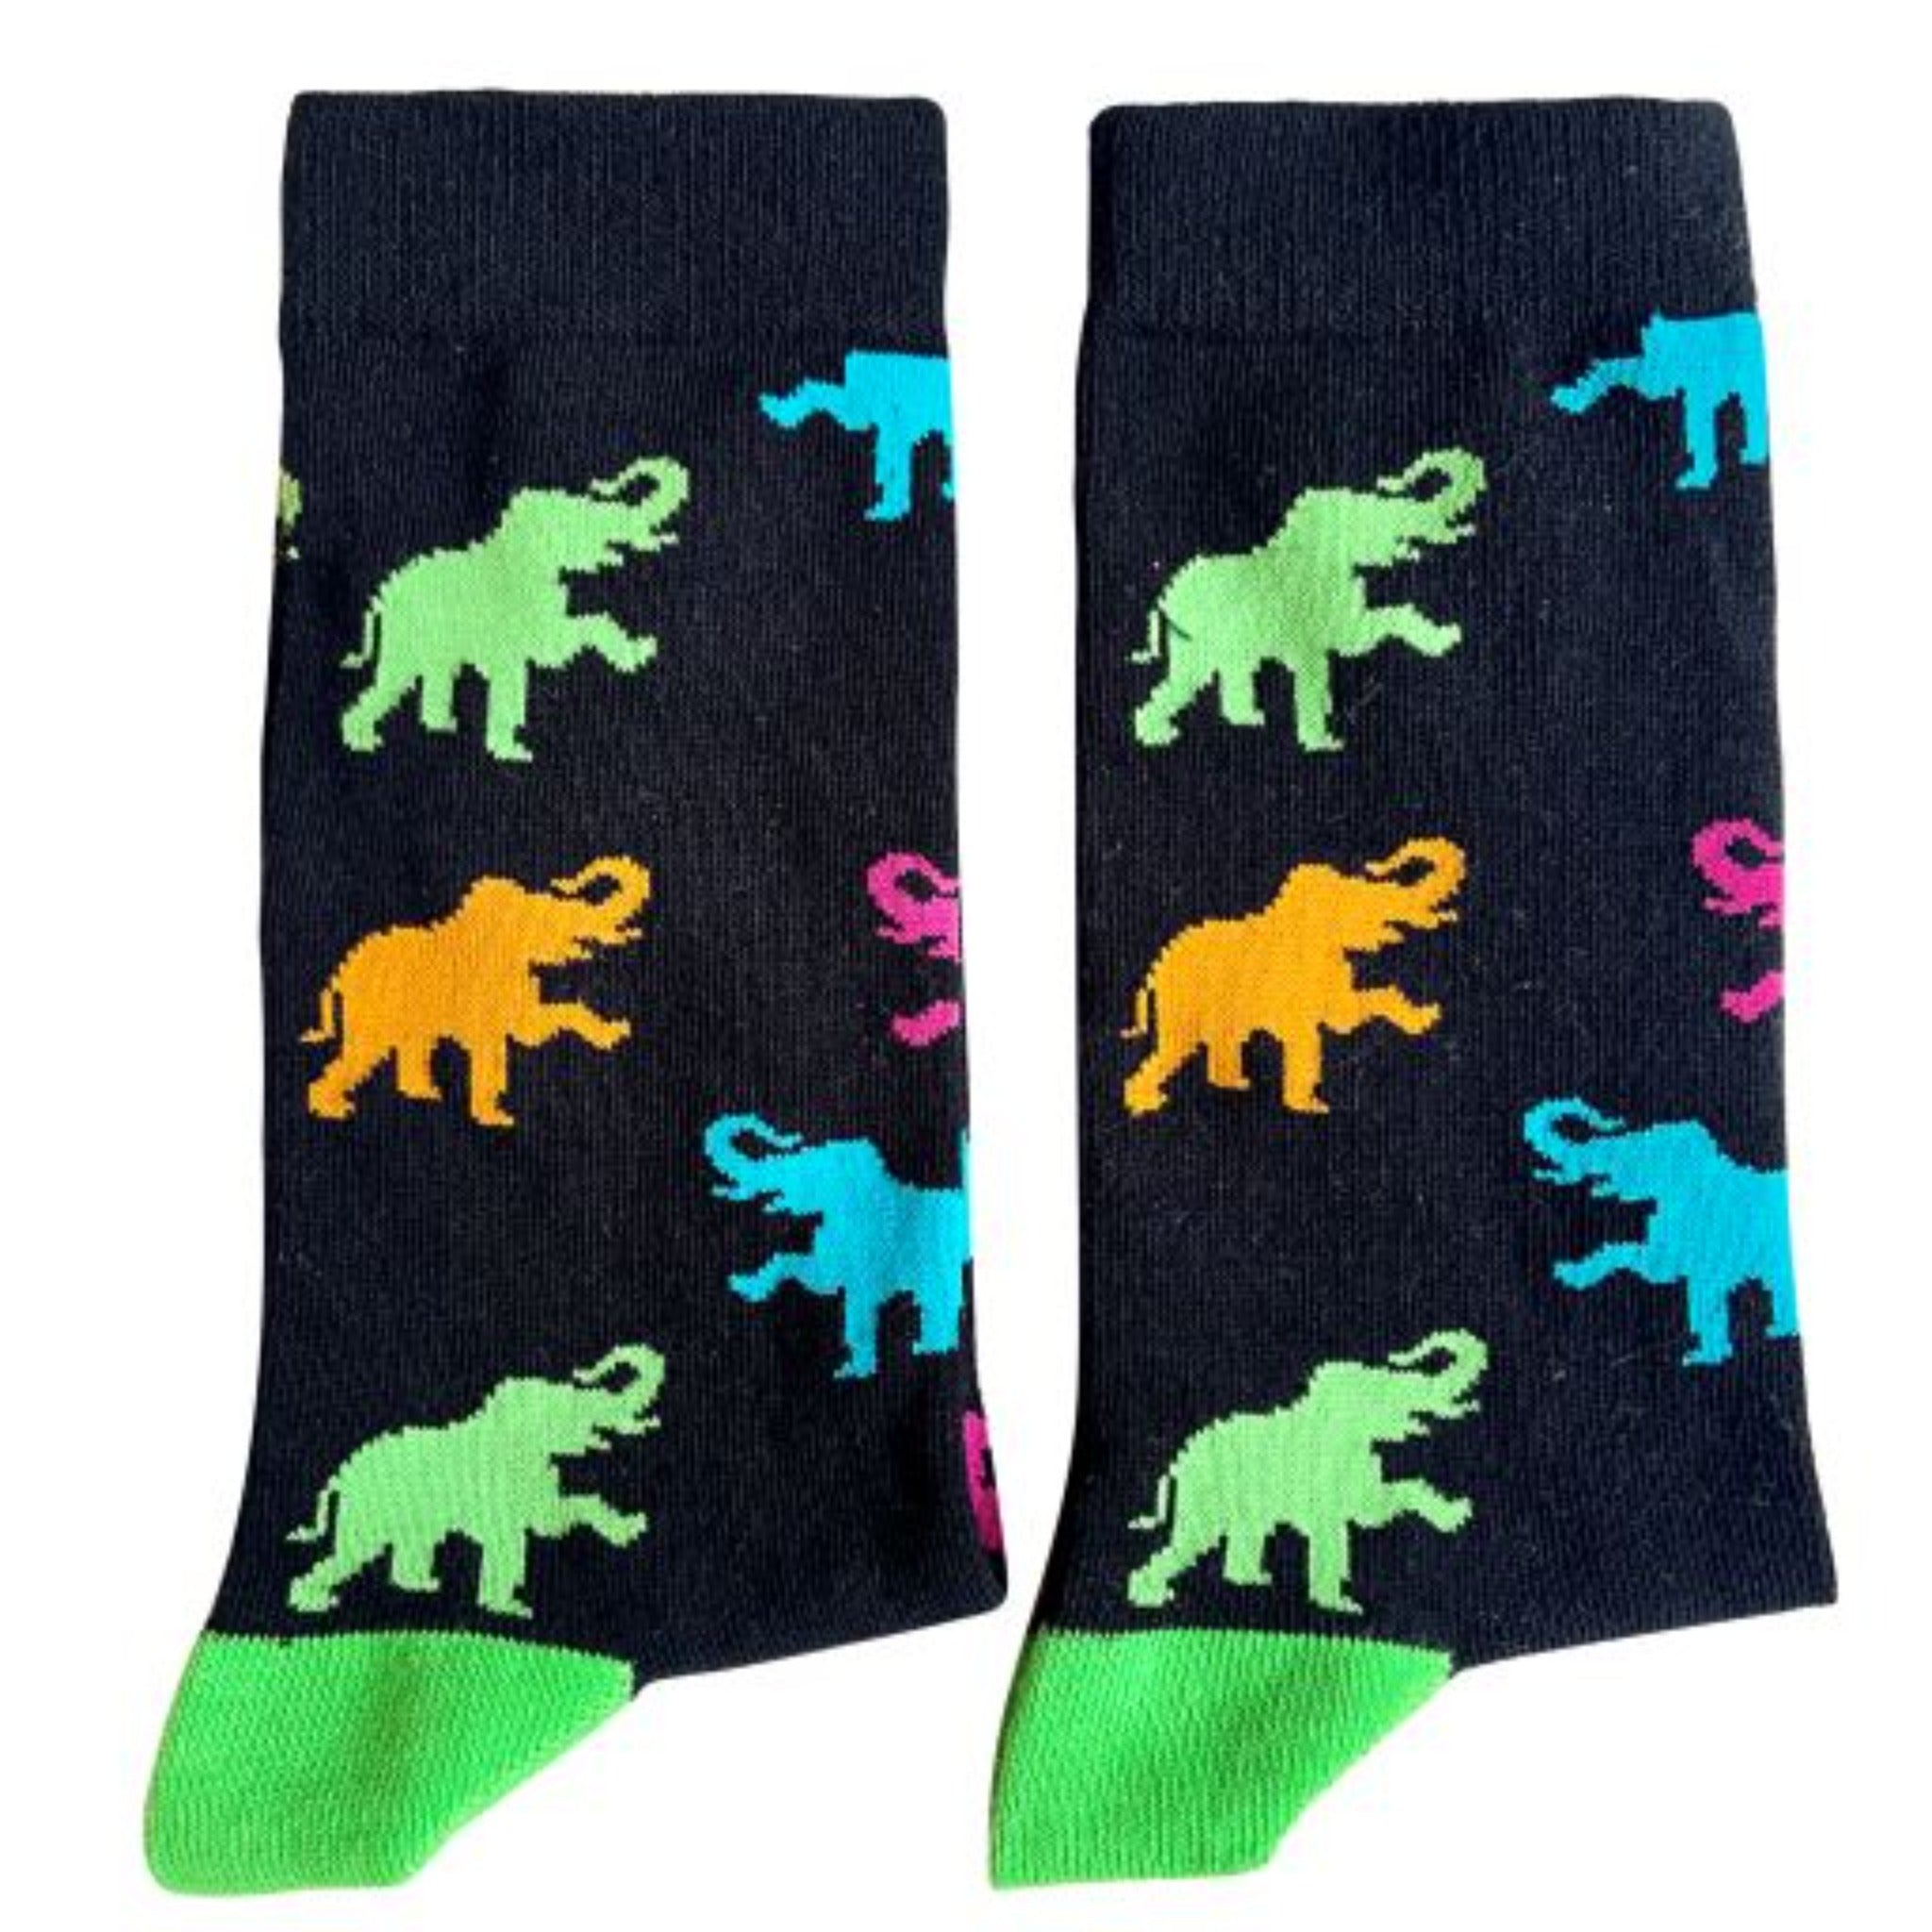 Elephant Socks Jolly Soles available all sizes